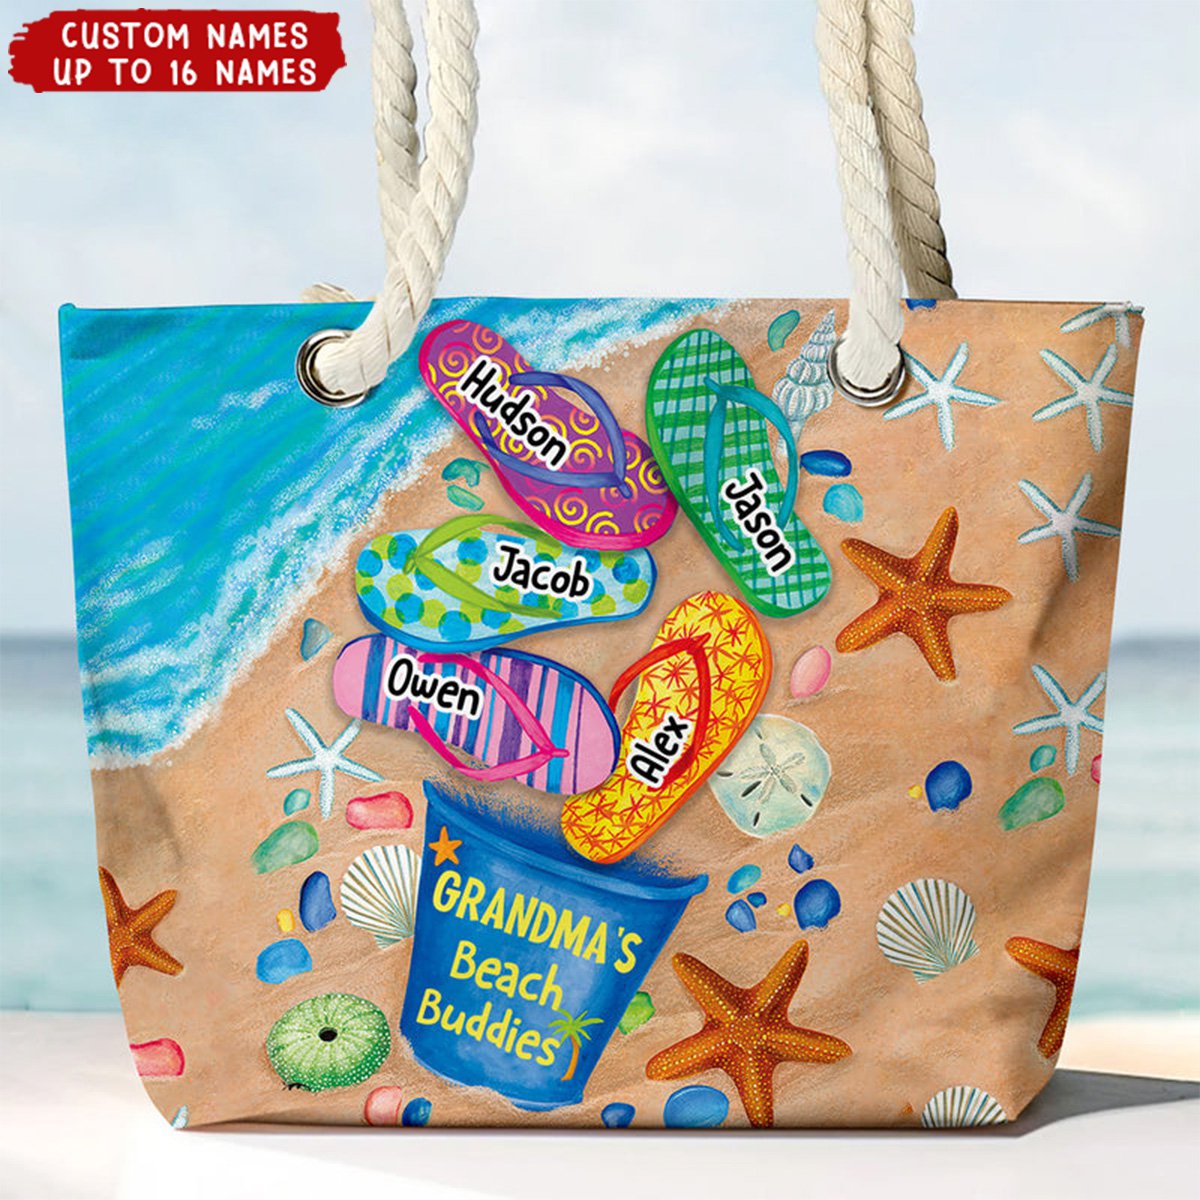 Nana's Beach Buddies Summer Flip Flop - Personalized Beach Bag - Gift for Grandmas Moms Aunties